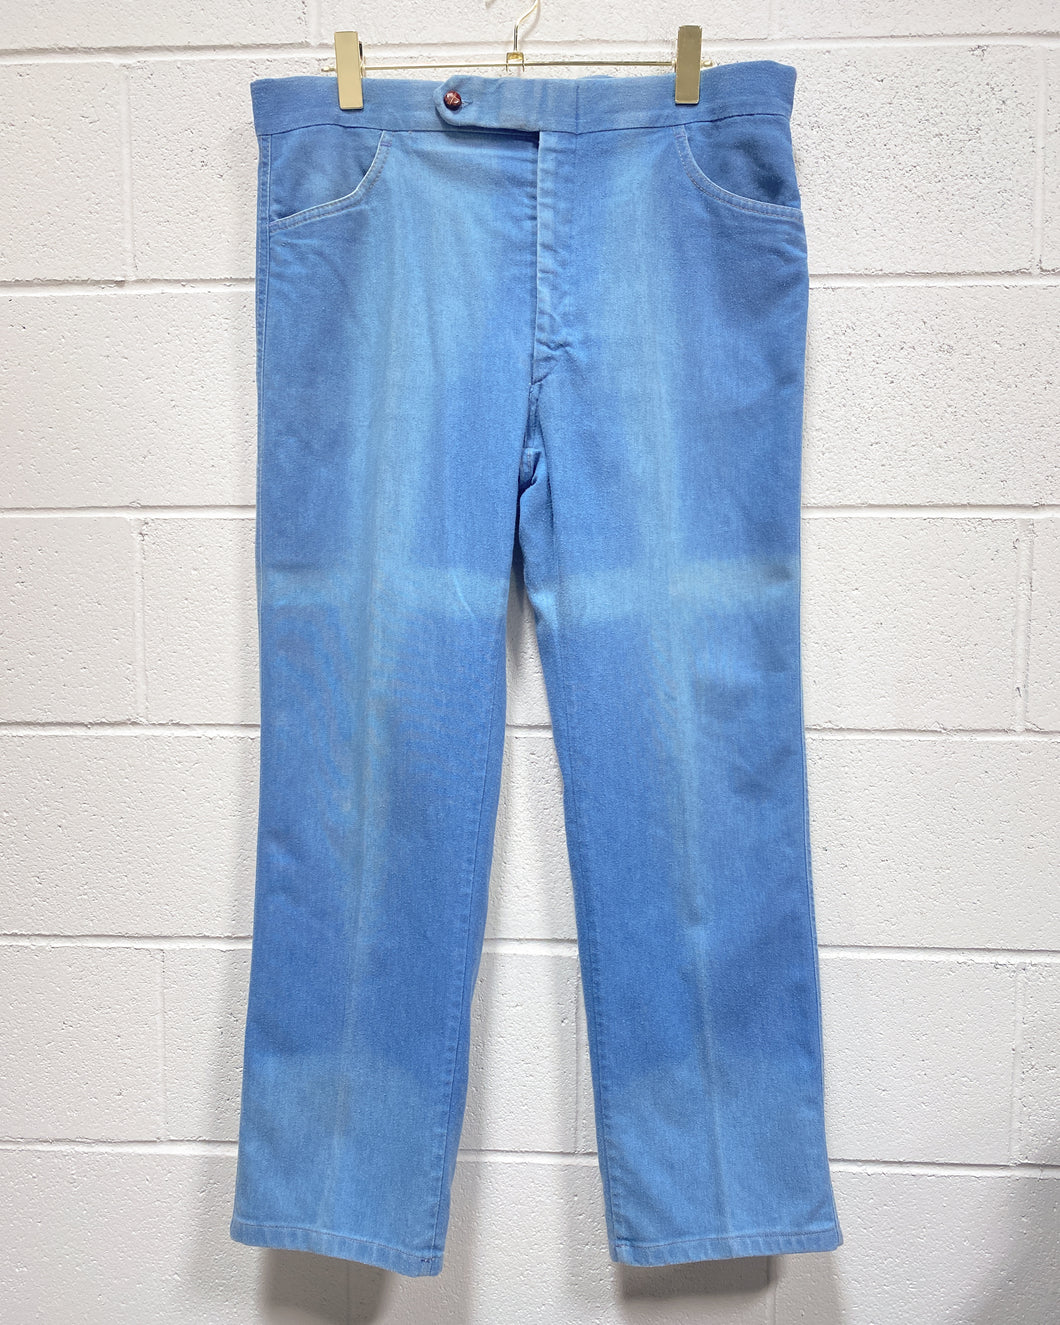 Vintage Denim Pants (38x31)